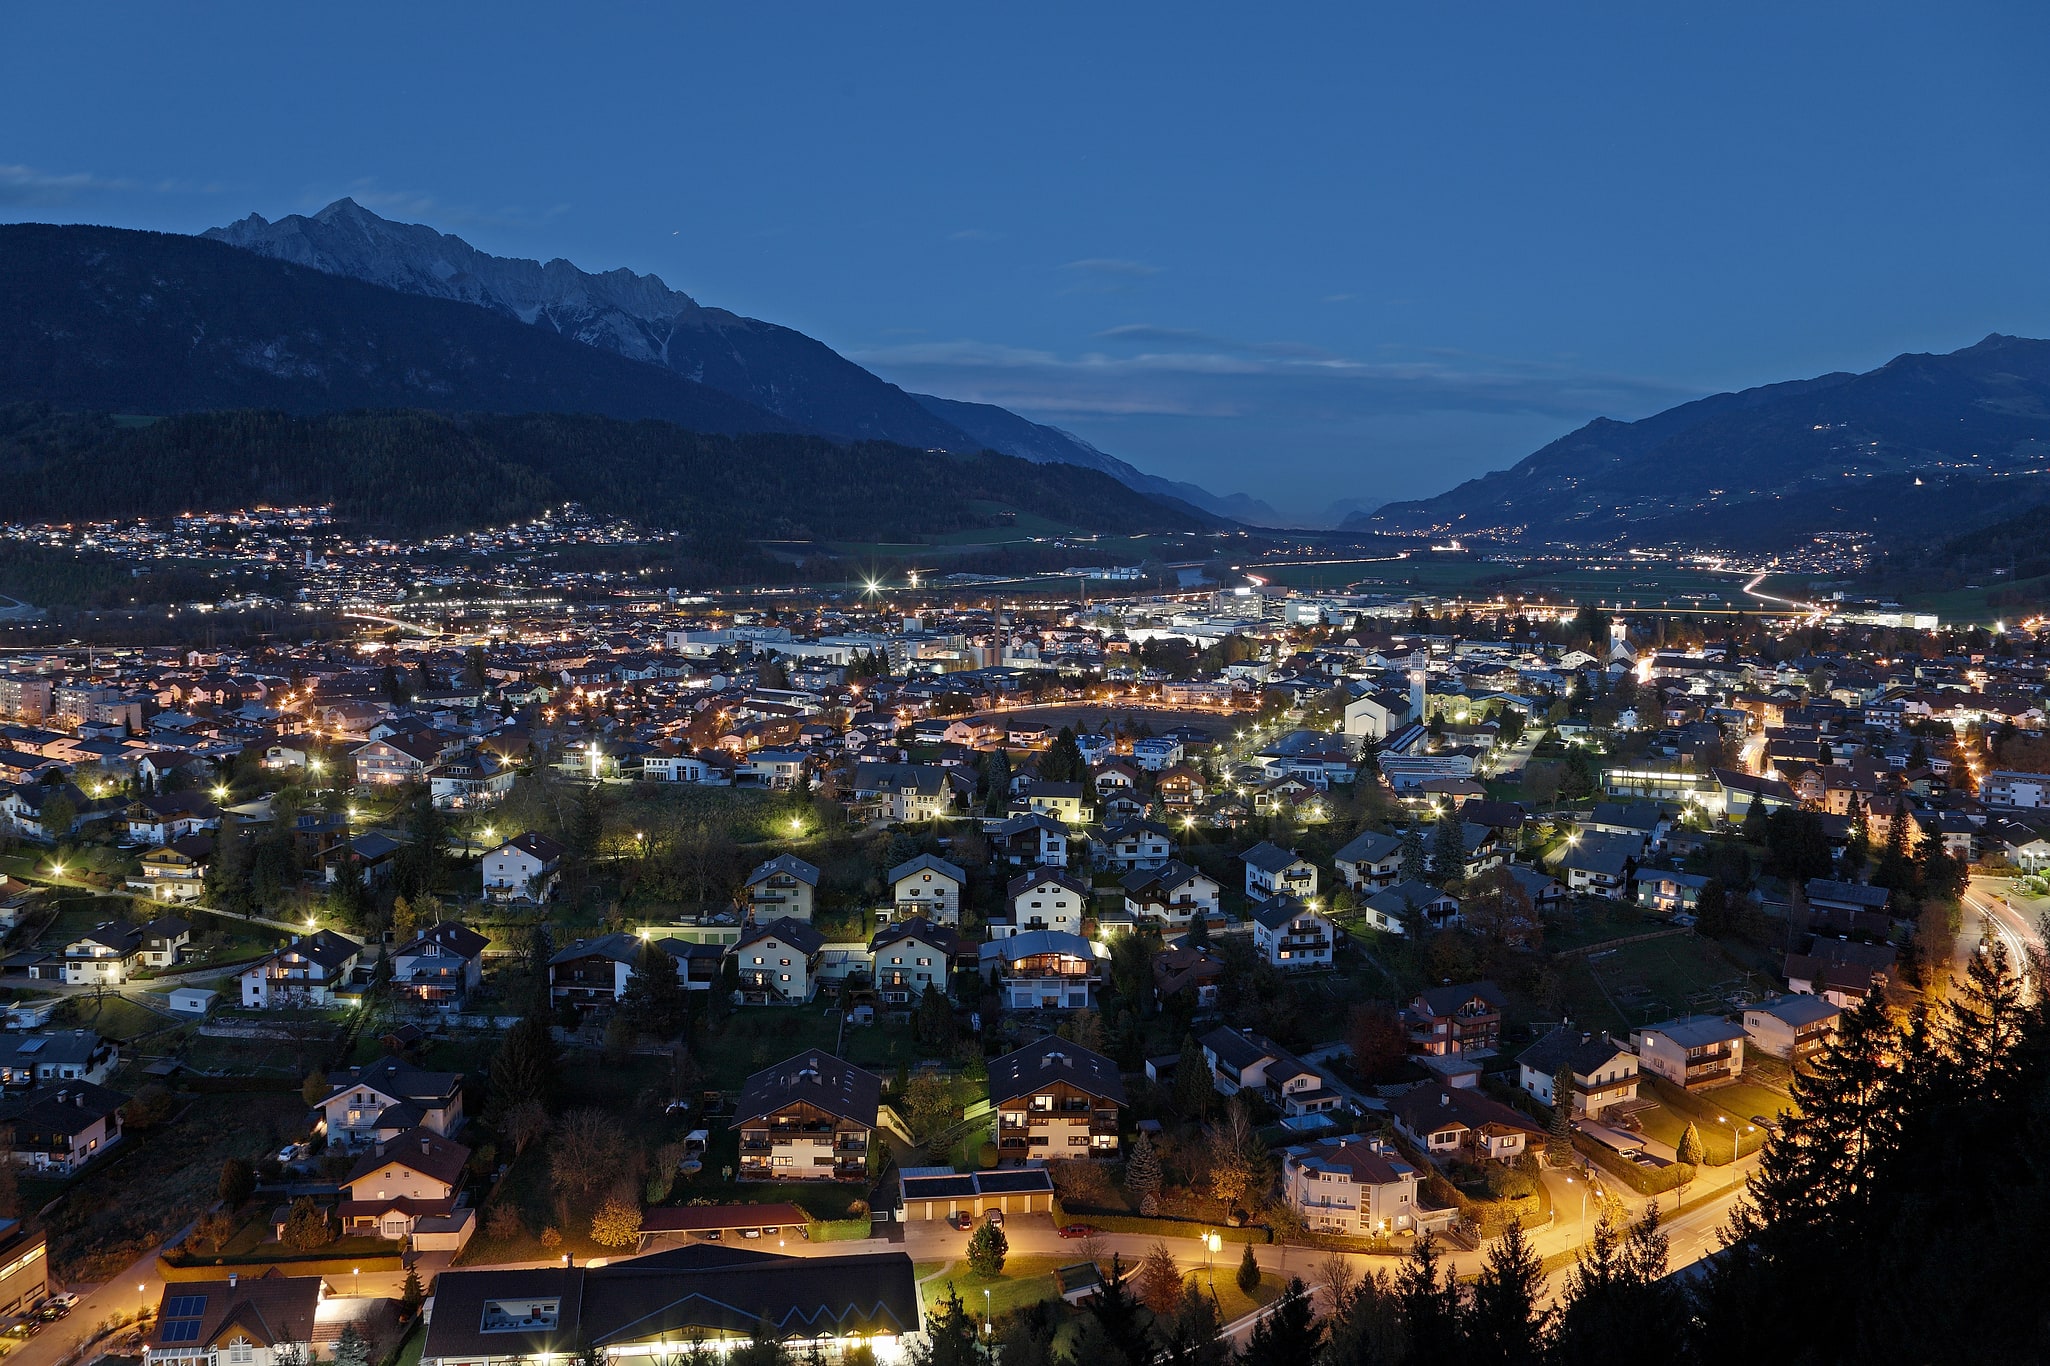 Wattens, Austria